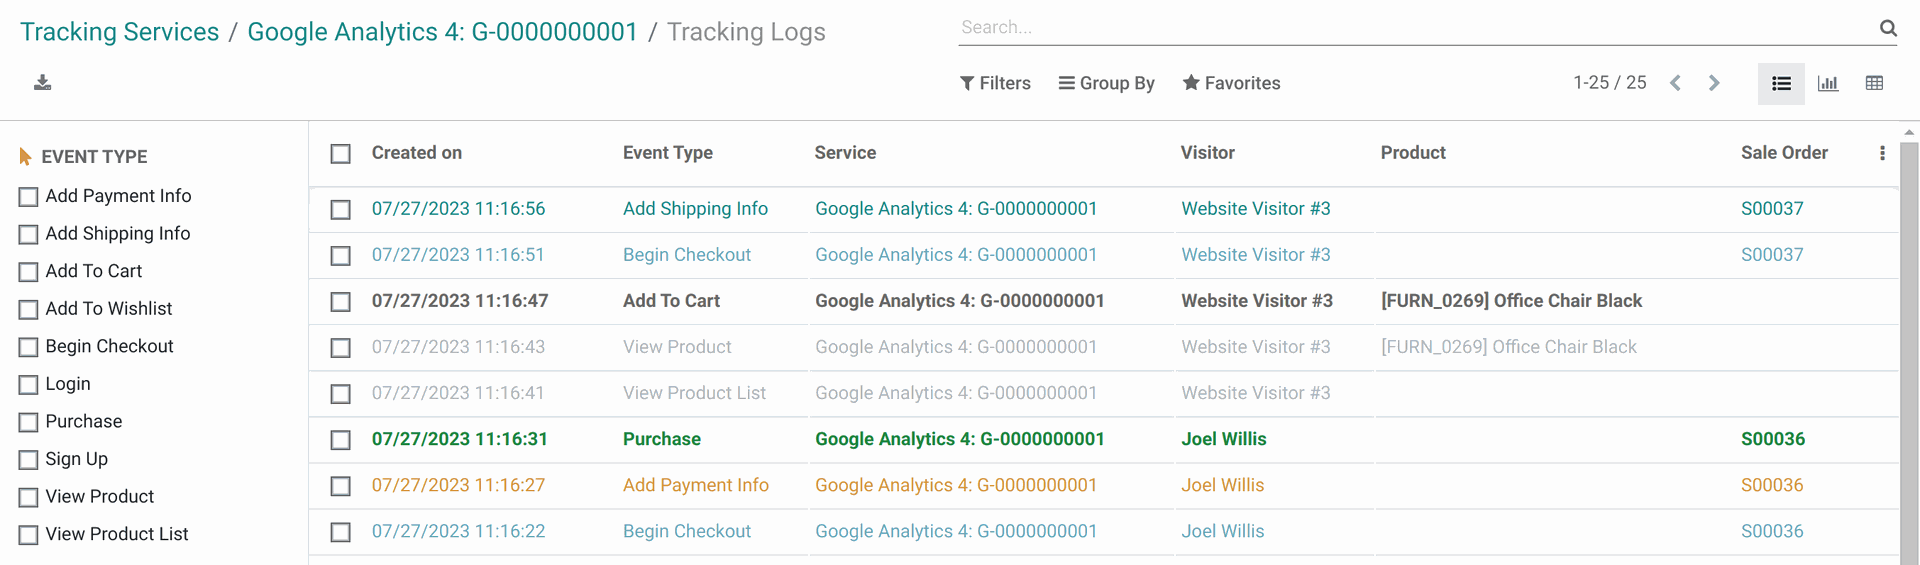 Odoo Google Analytics 4 tracking - internal logging in 15.0